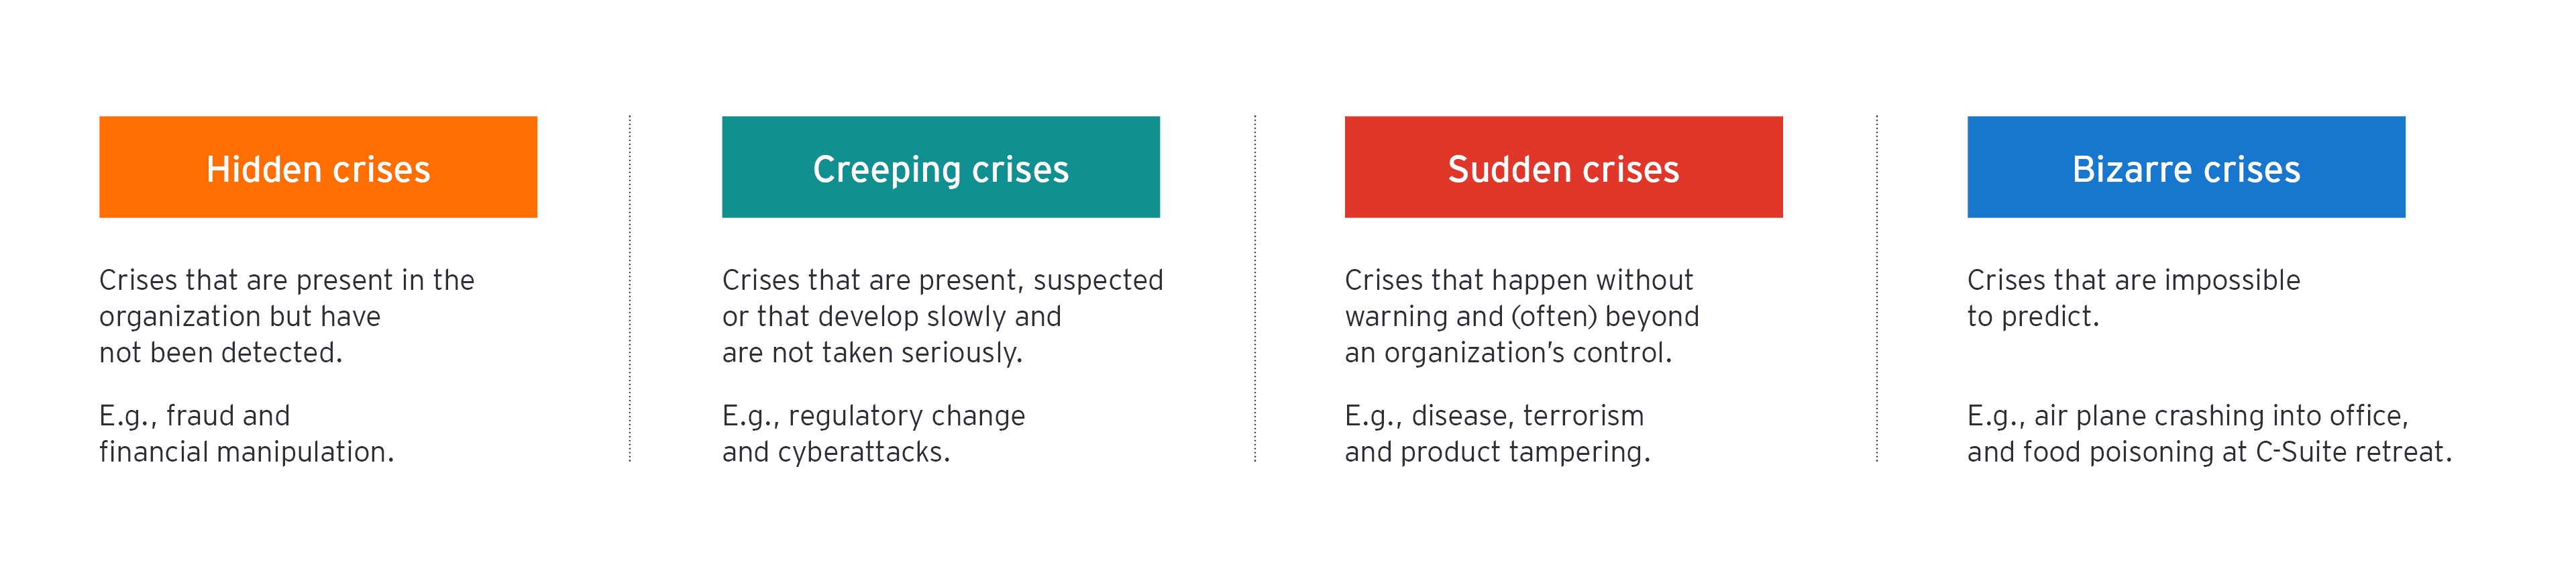 The four main crisis categories